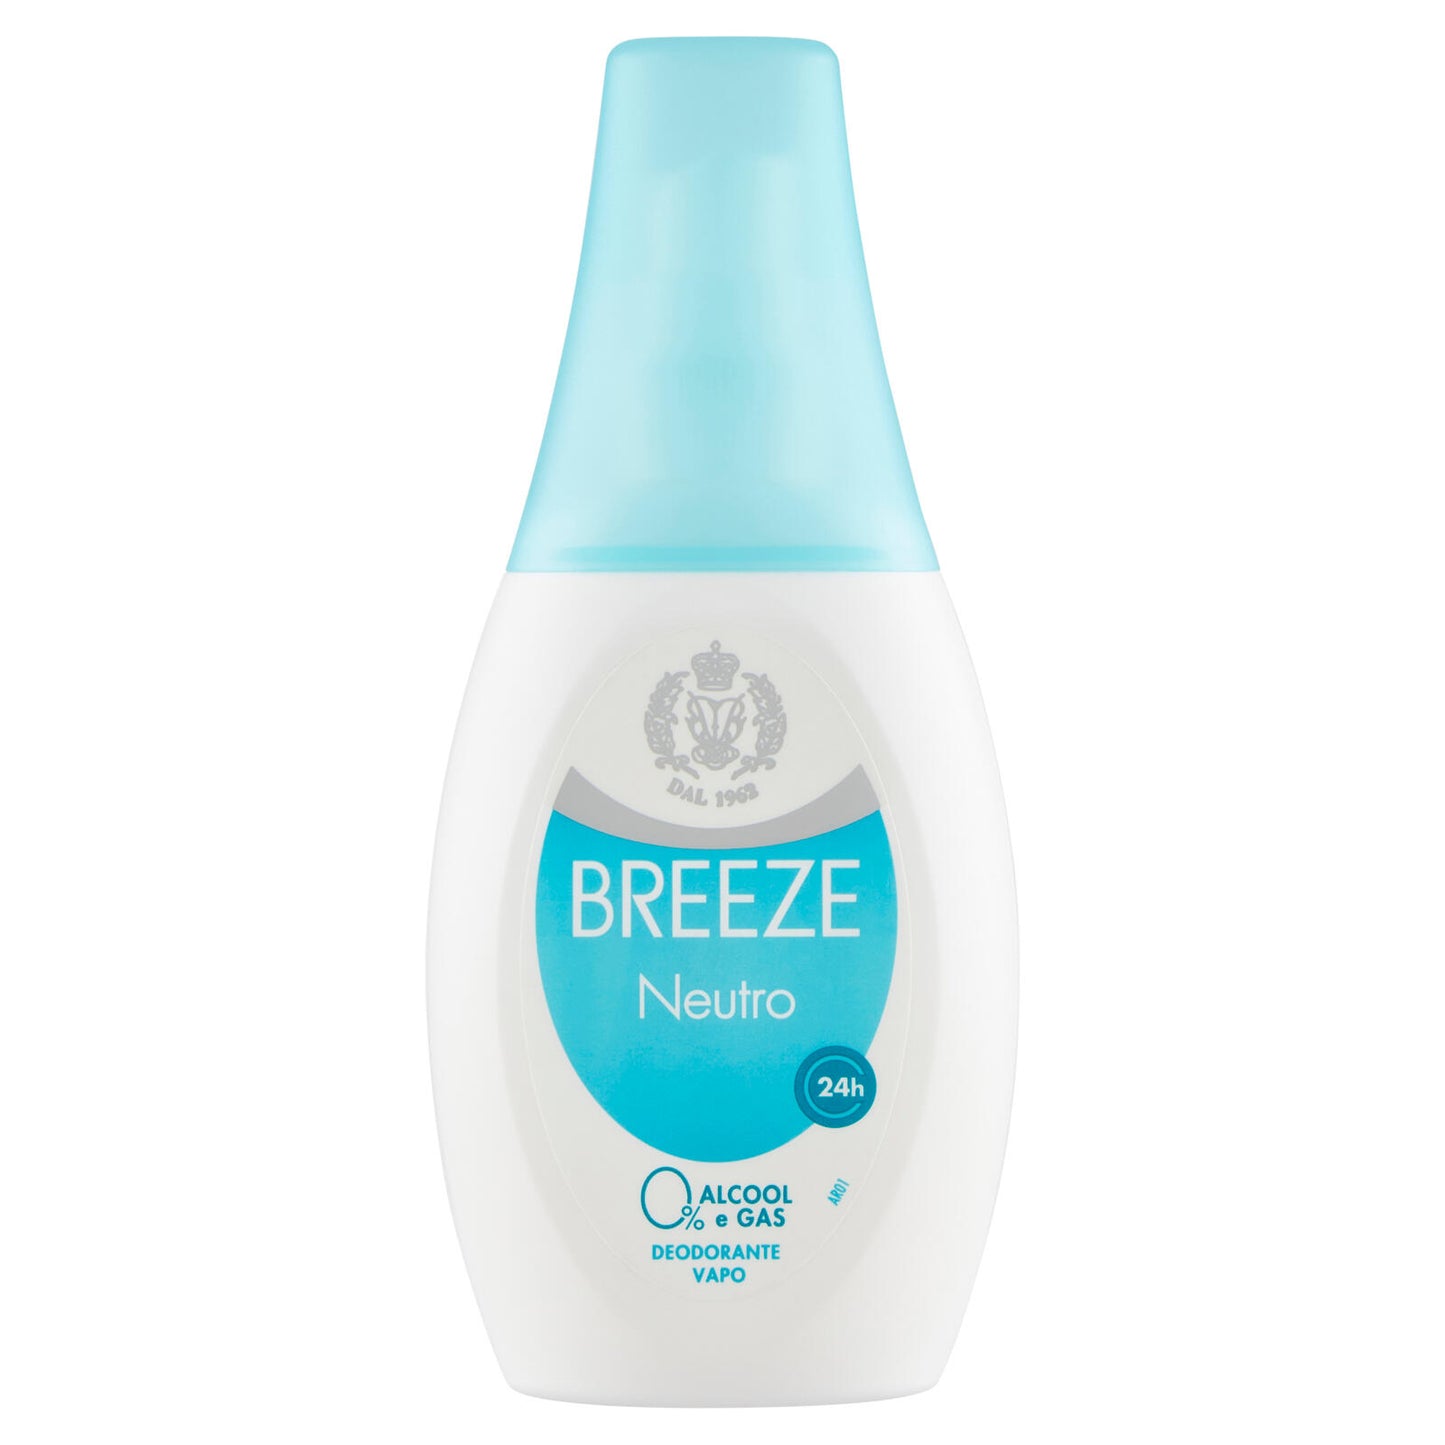 Breeze Neutro Deodorante Vapo 75 mL